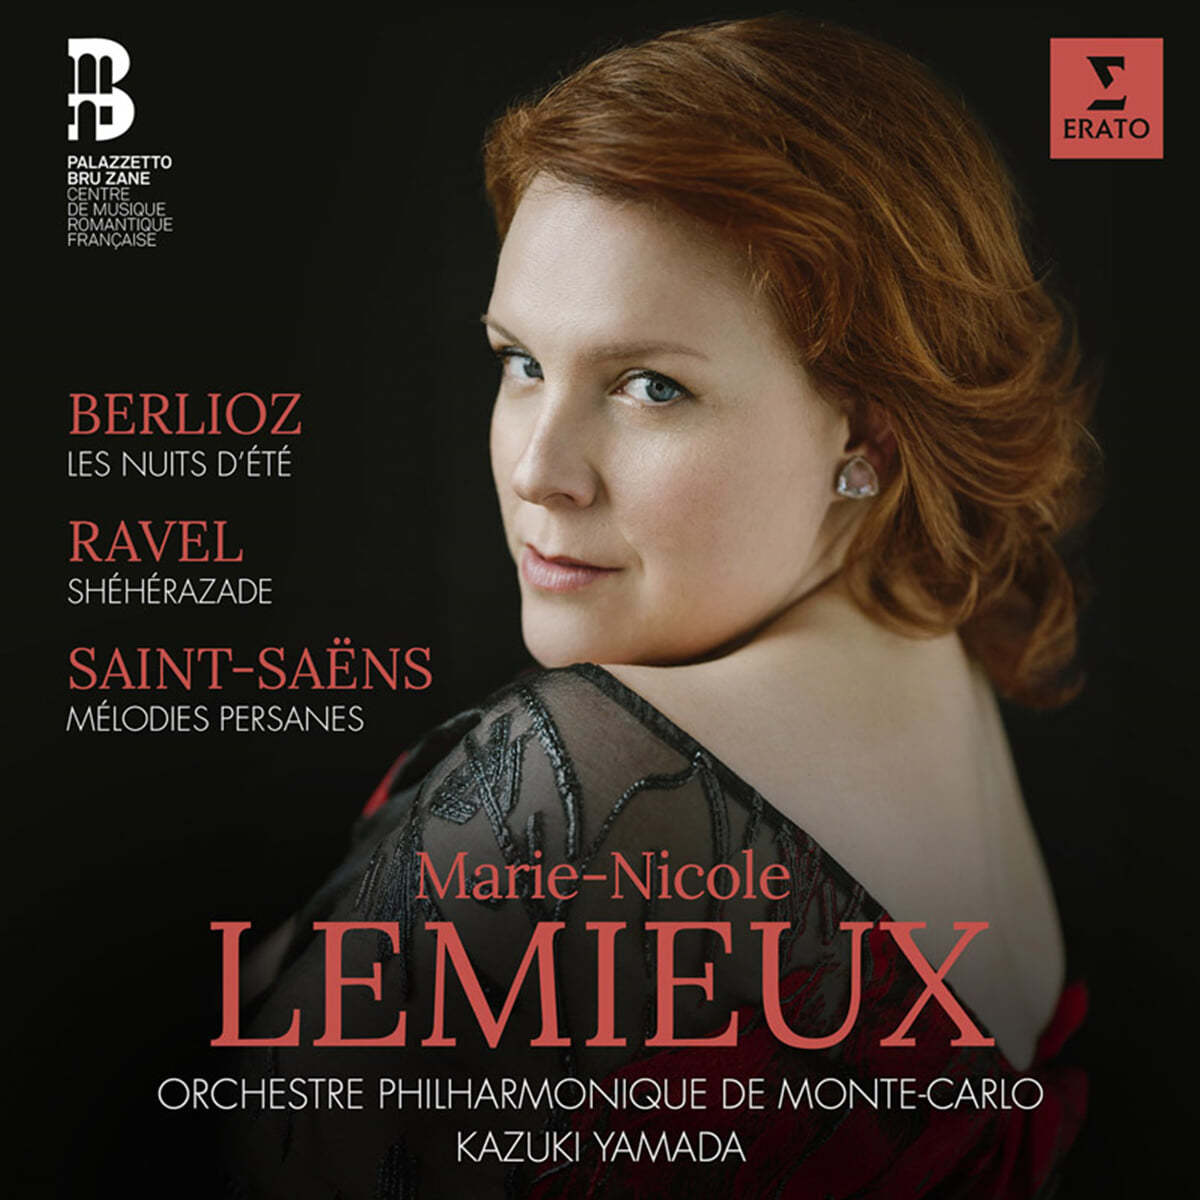 Marie-Nicole Lemieux 베를리오즈: 여름 밤 / 라벨: 세헤라자데 / 생상스: 페르시아의 멜로디 (Berlioz, Ravel & Saint-Saens)